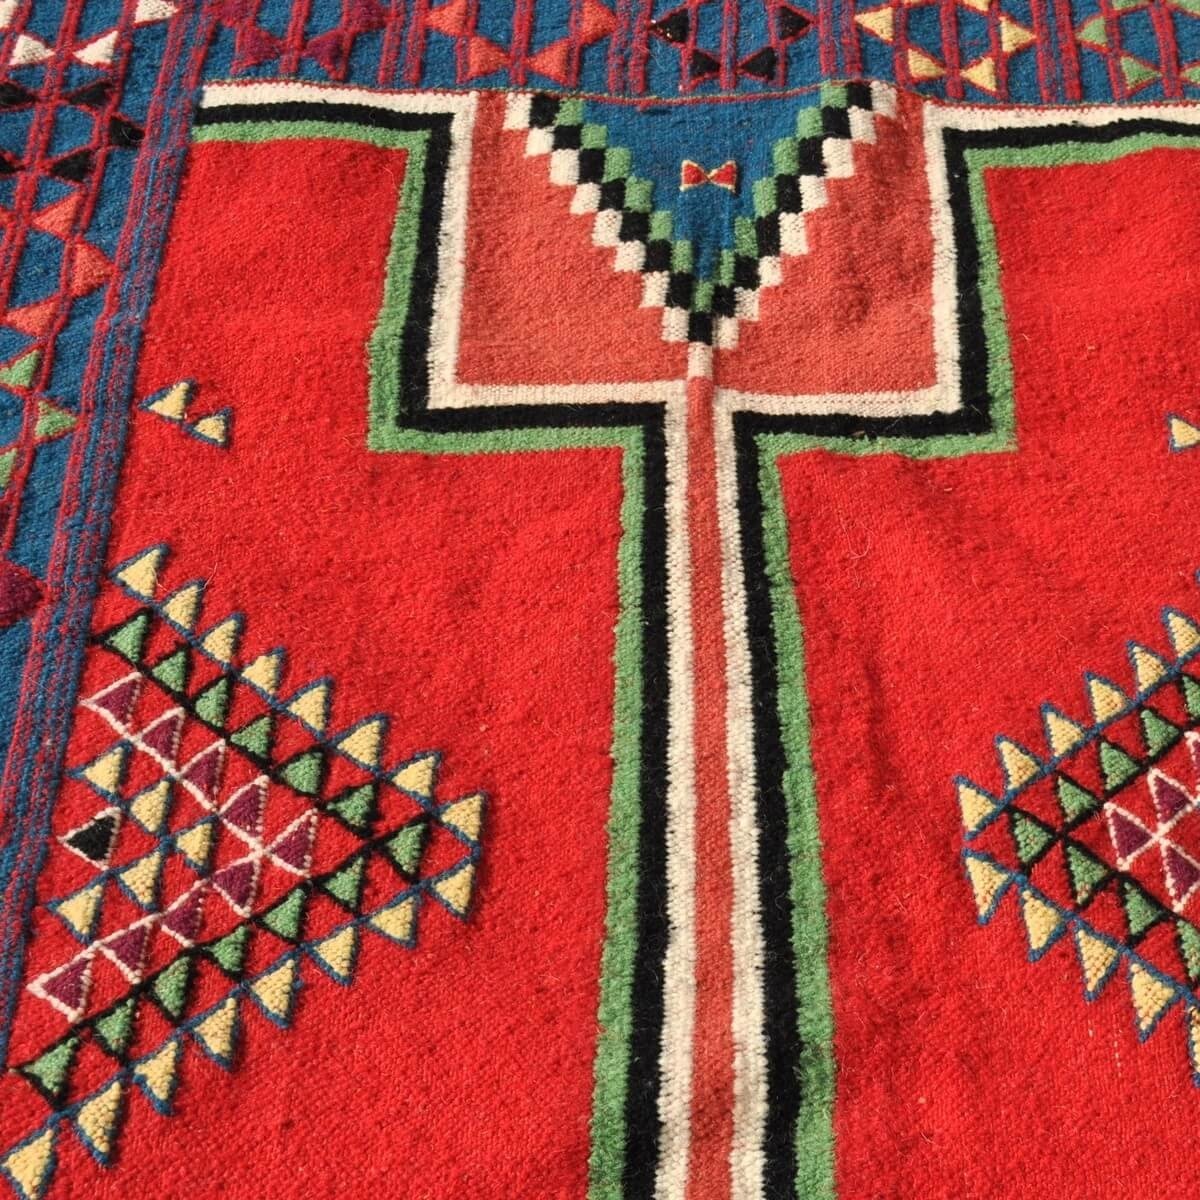 Berber tapijt Tapijt Kilim El Alia 130x230 Rood/Blauw (Handgeweven, Wol, Tunesië) Tunesisch Kilim Tapijt uit de stad Kairouan. R